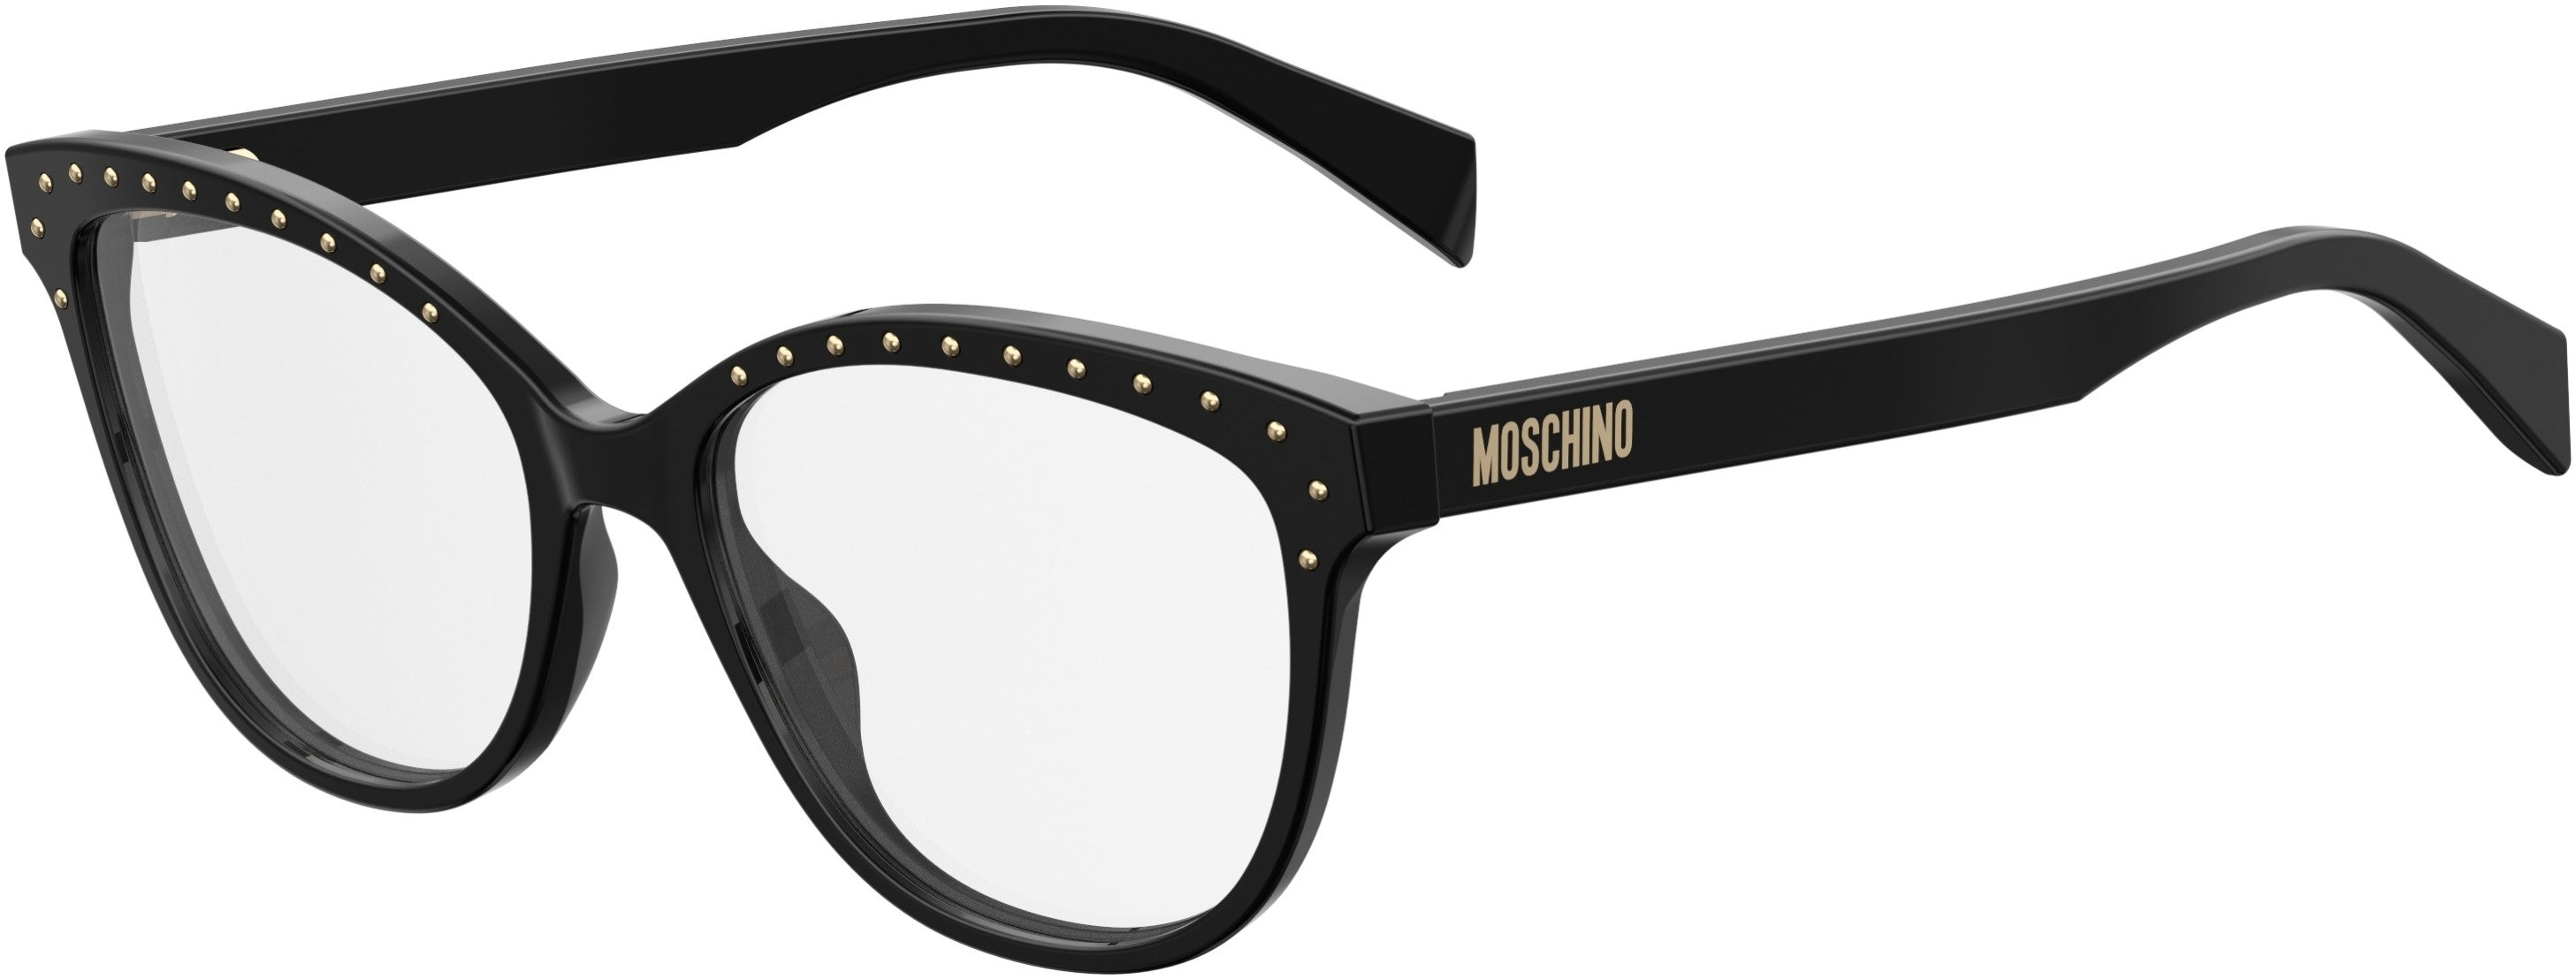  Moschino 506 Oval Modified Eyeglasses 0807-0807  Black (00 Demo Lens)